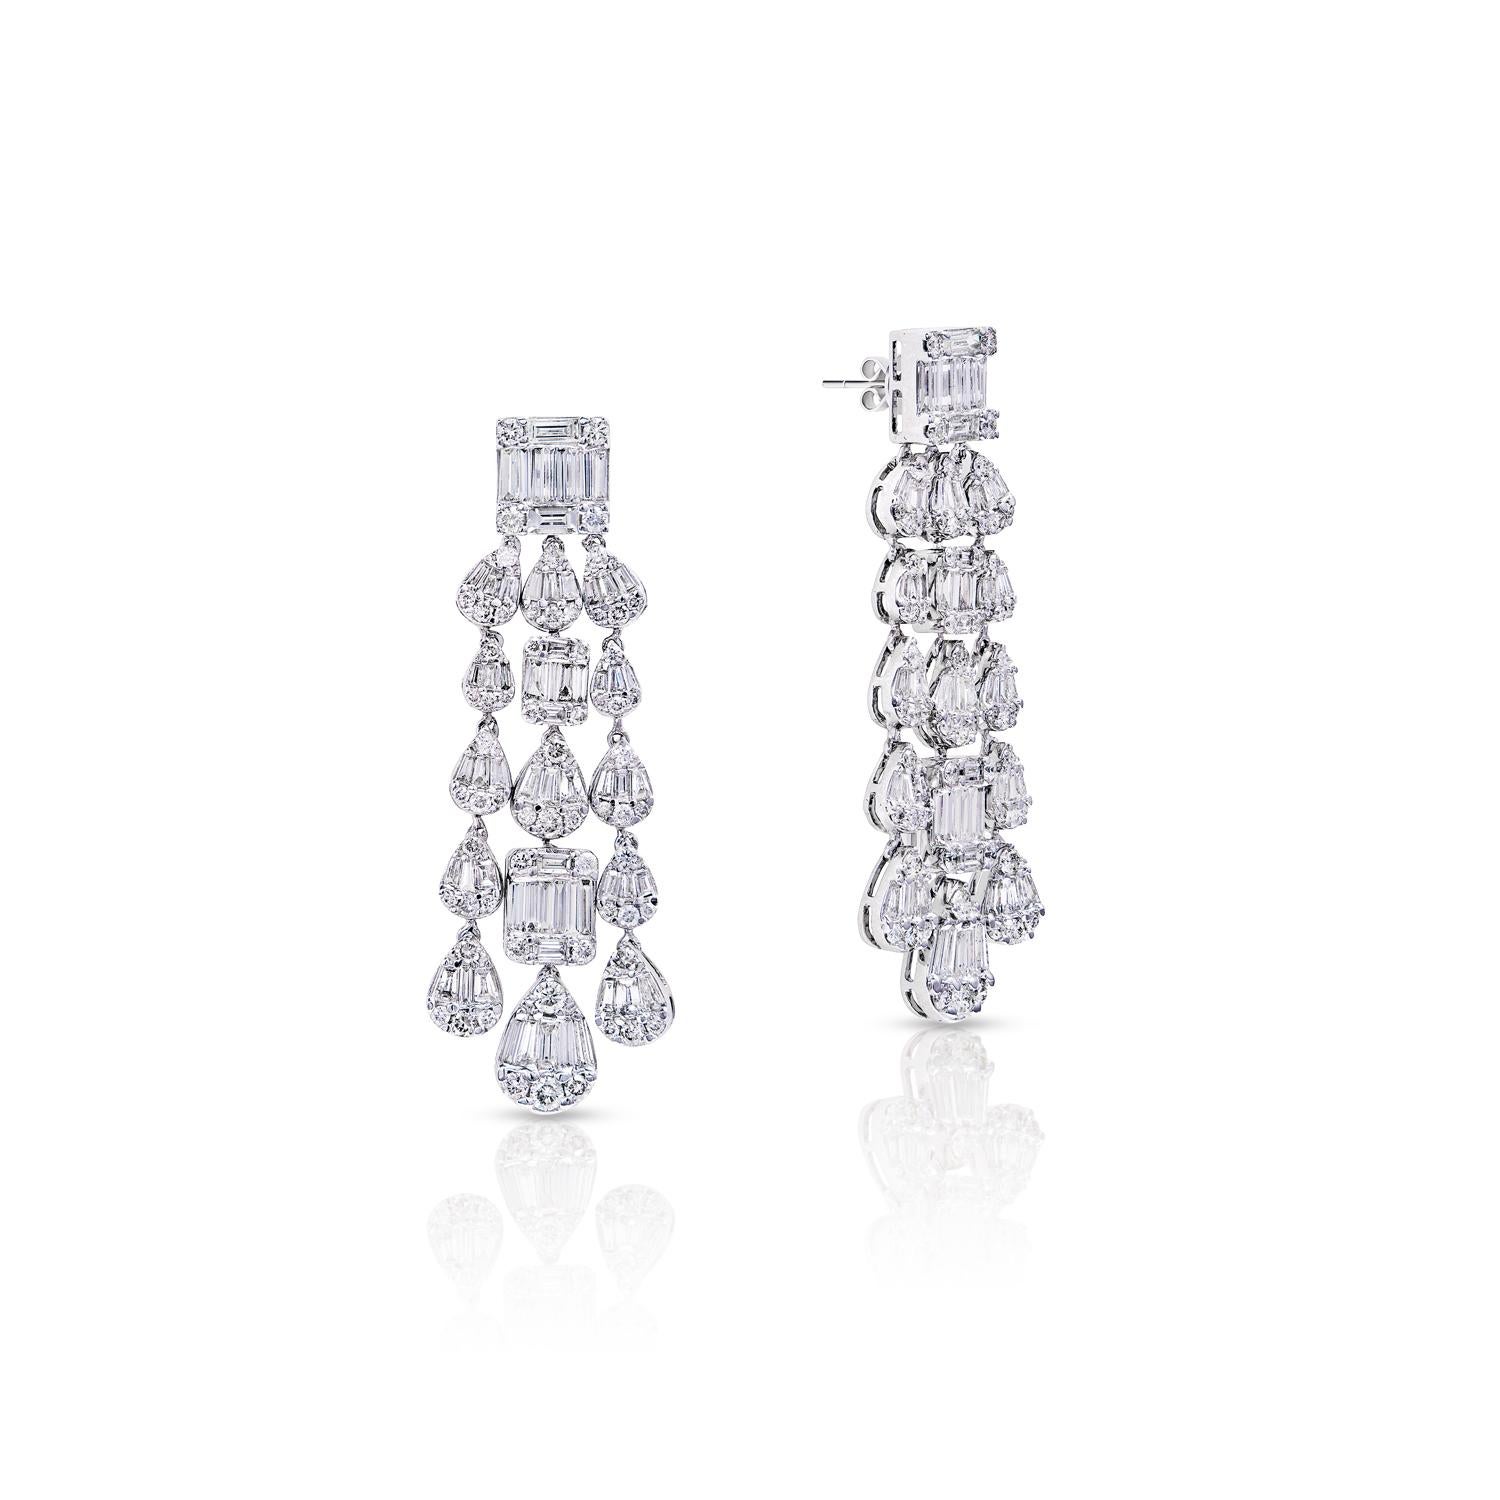 Diamond Chandelier Earrings For Ladies:

Main Diamonds:
Carat Weight: 5.94 Carats
Shape: Combine Mix Shape (CMB)

Metal: 14 Karat White Gold
Style: Chandelier Earrings

Total Carat Weight: 5.94 Carats